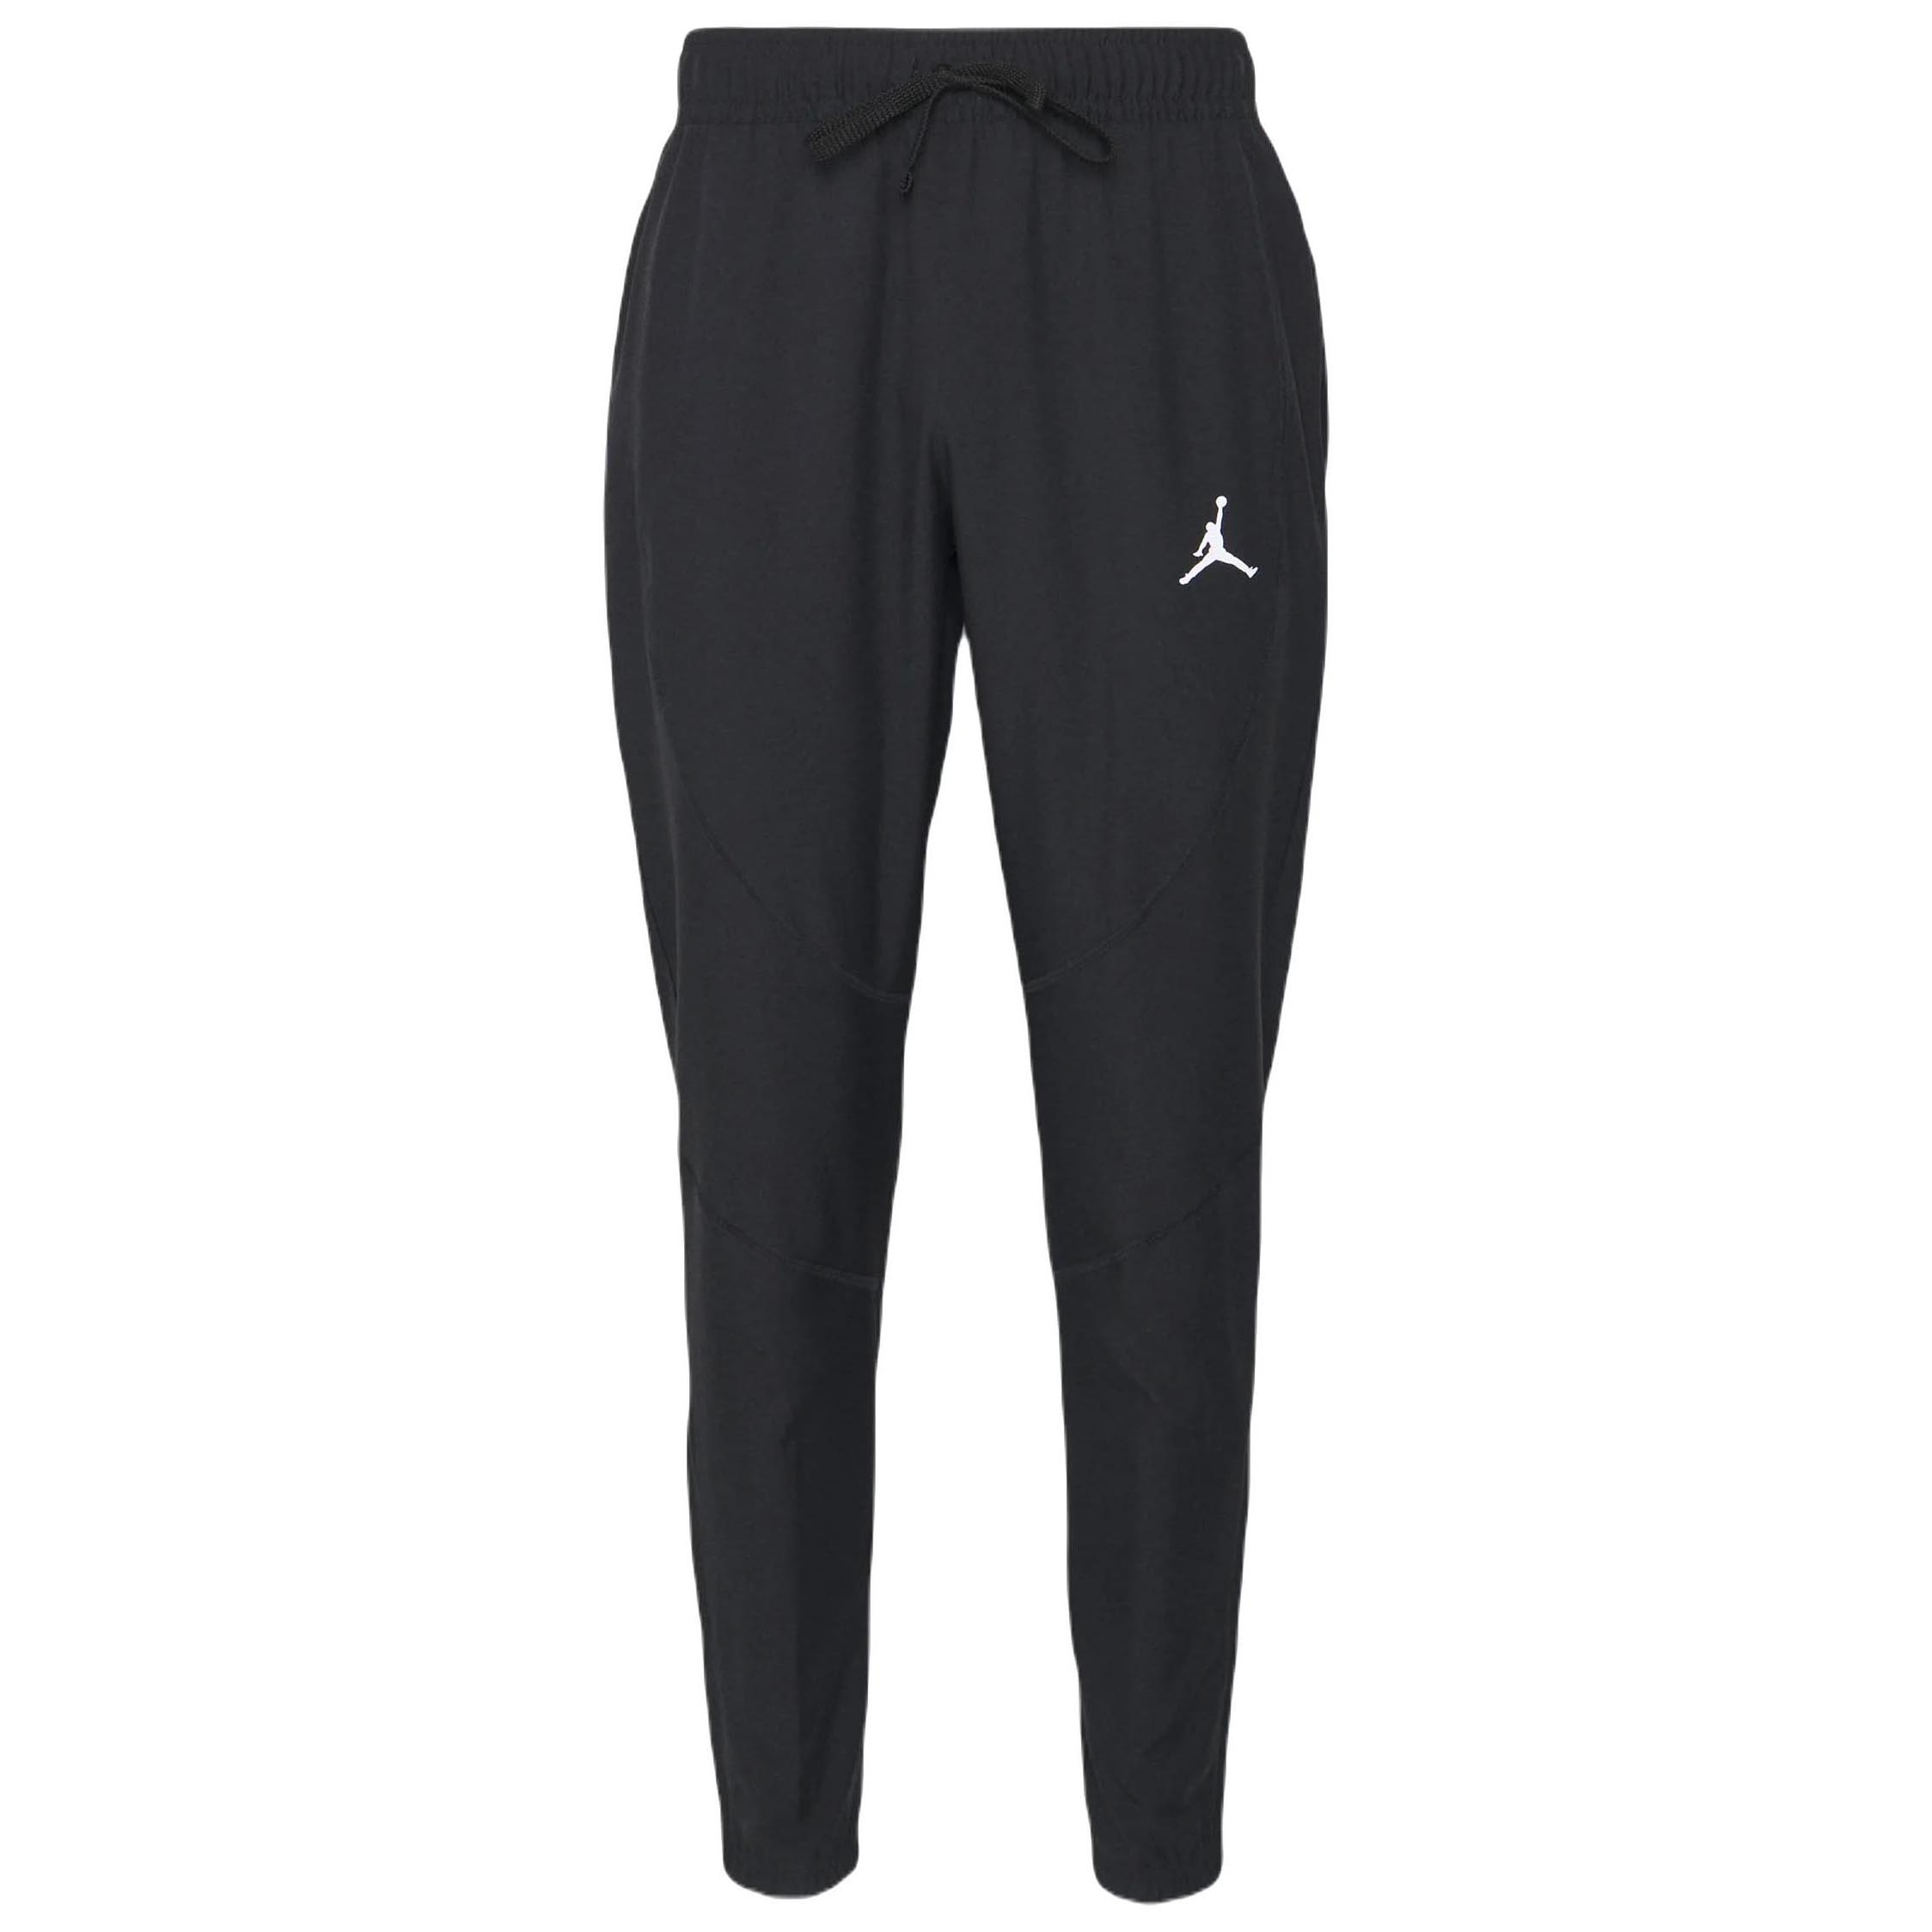 Спортивные брюки Nike Air Jordan Woven, черный спортивные брюки nike air jordan essen черный